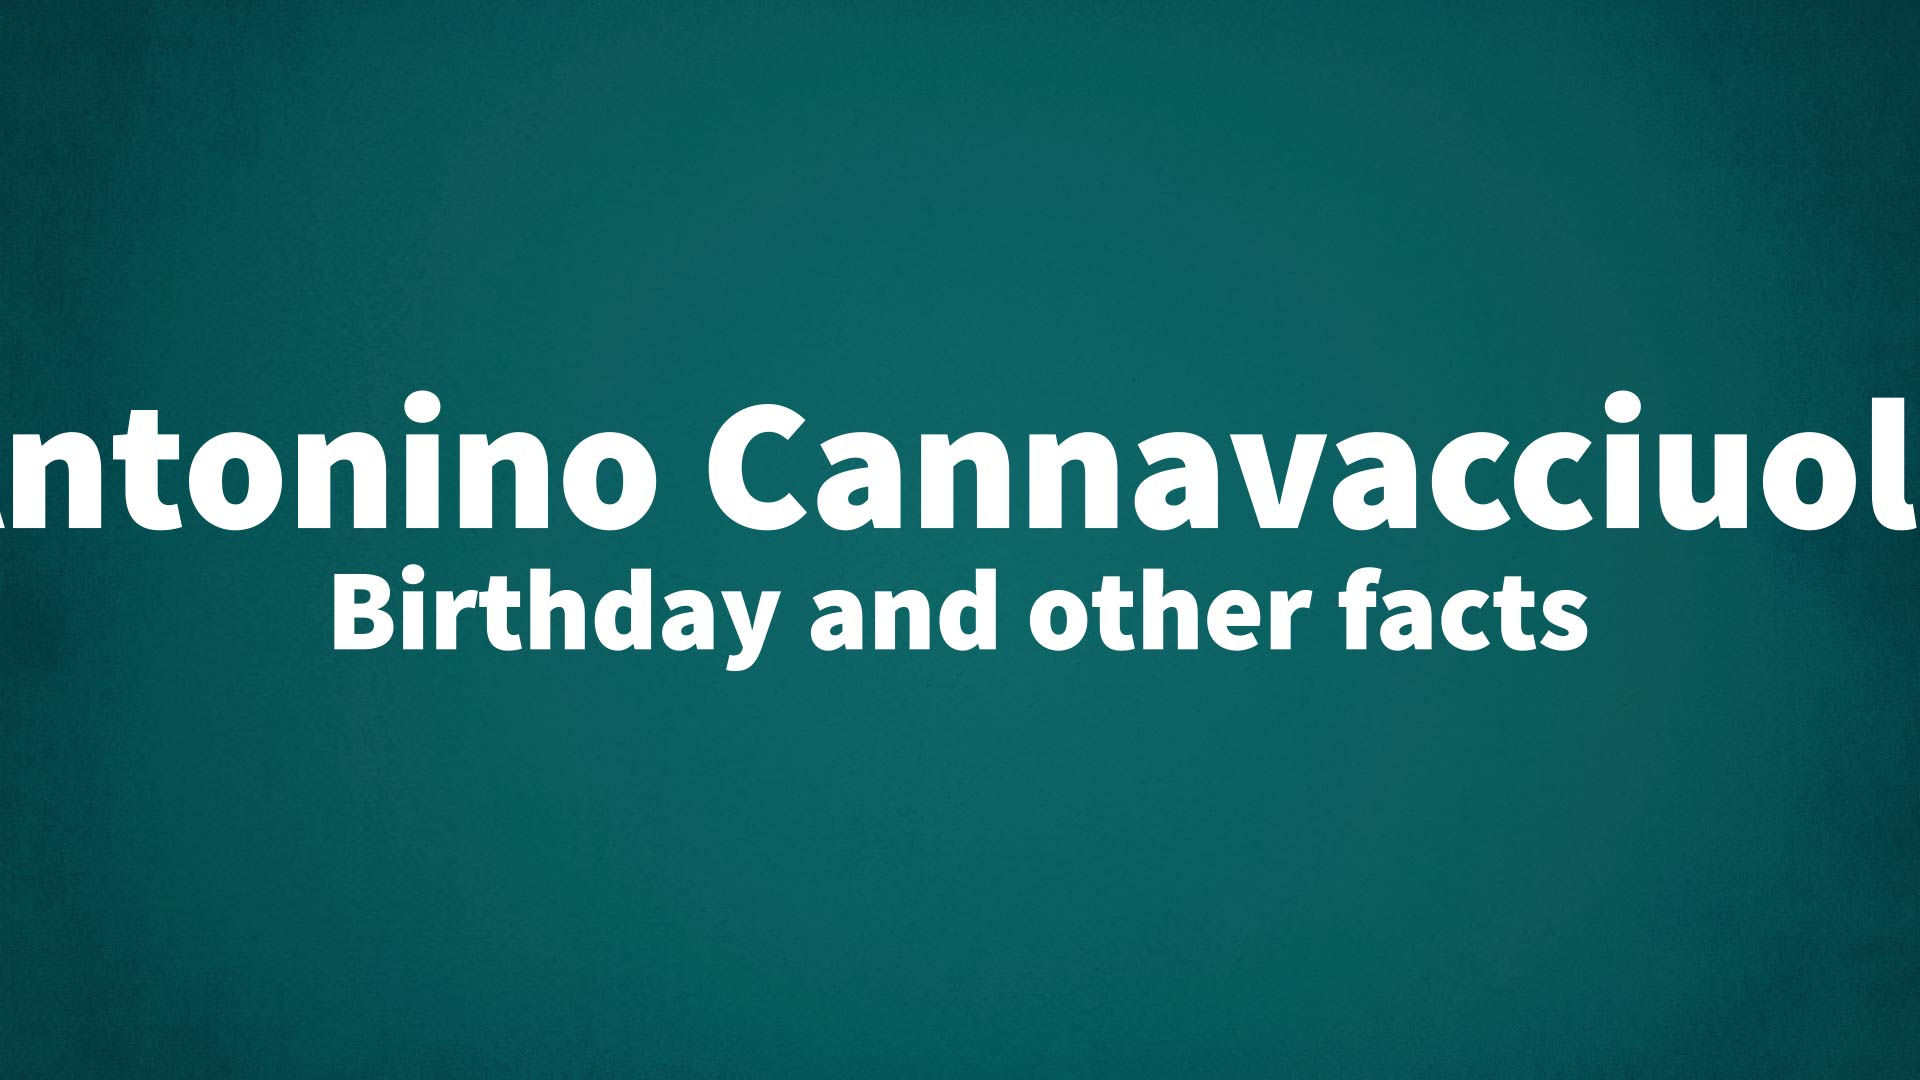 title image for Antonino Cannavacciuolo birthday